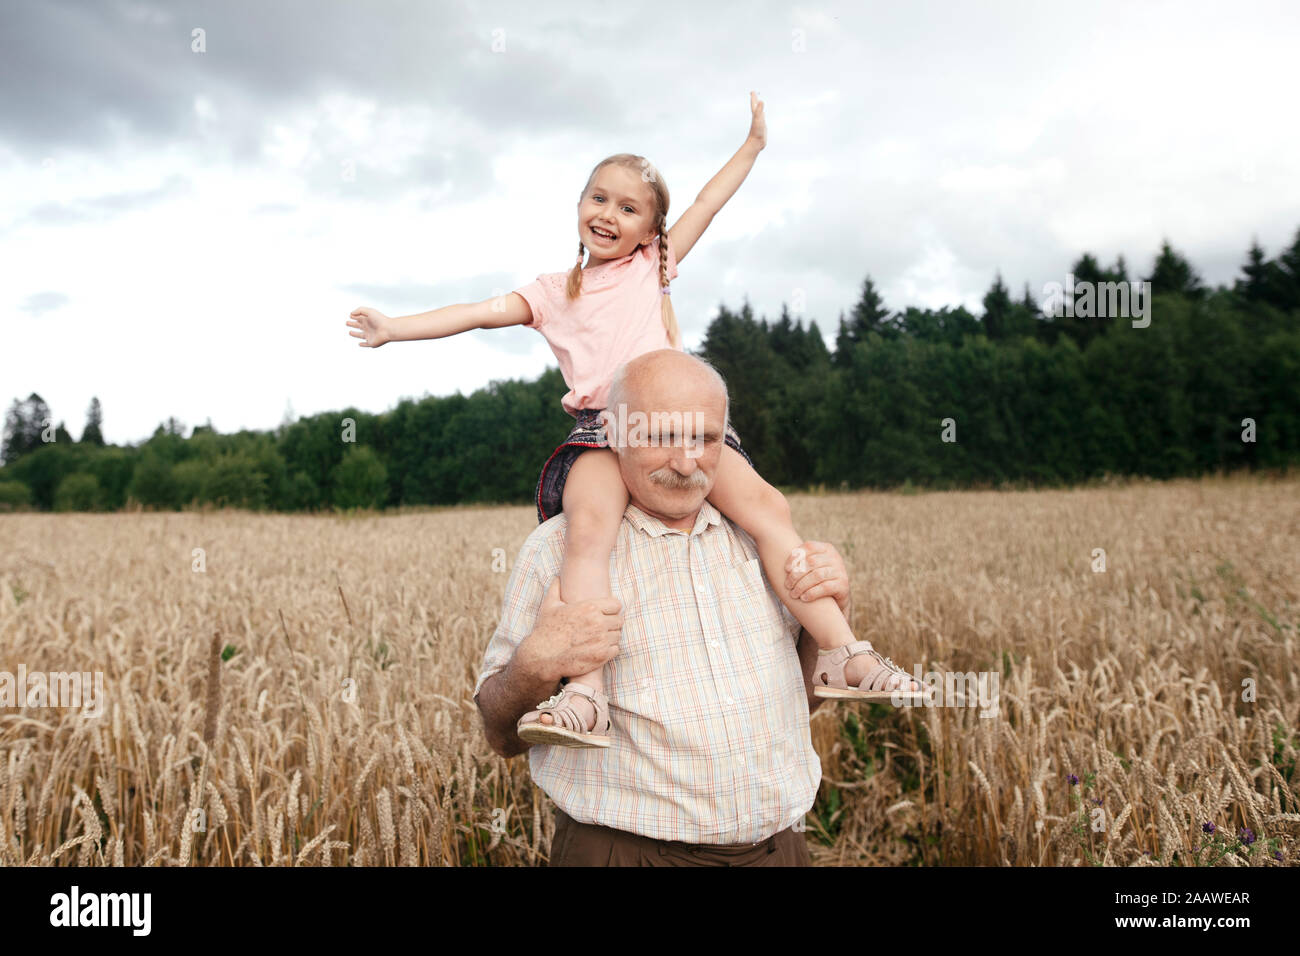 Portrait of happy little girl on grandfather's shoulders in an oat field Stock Photo